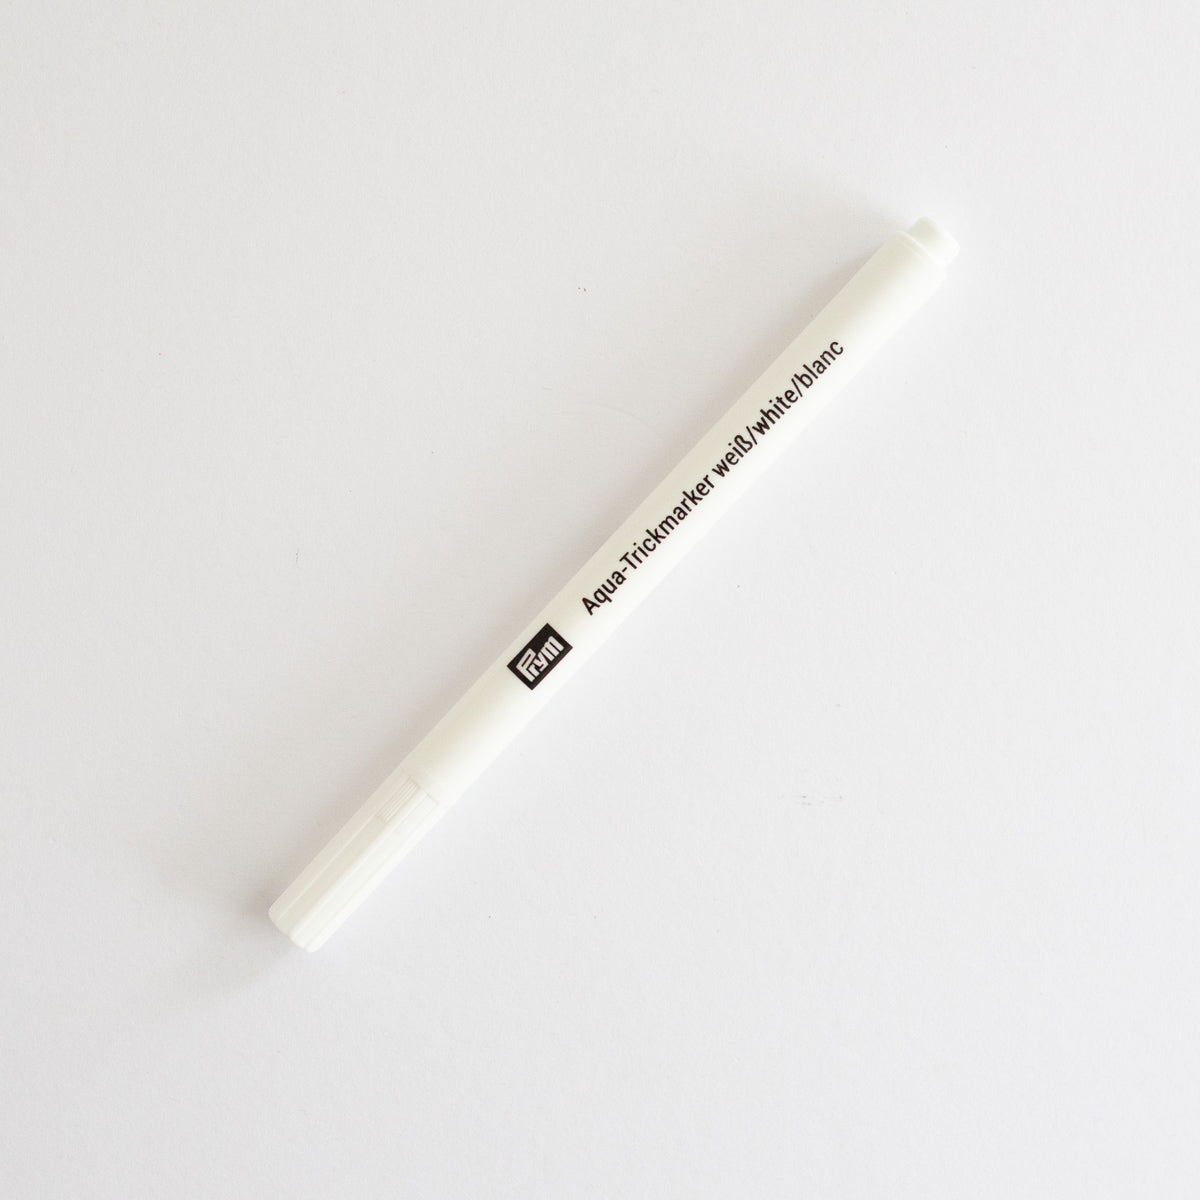 Prym marking pen white